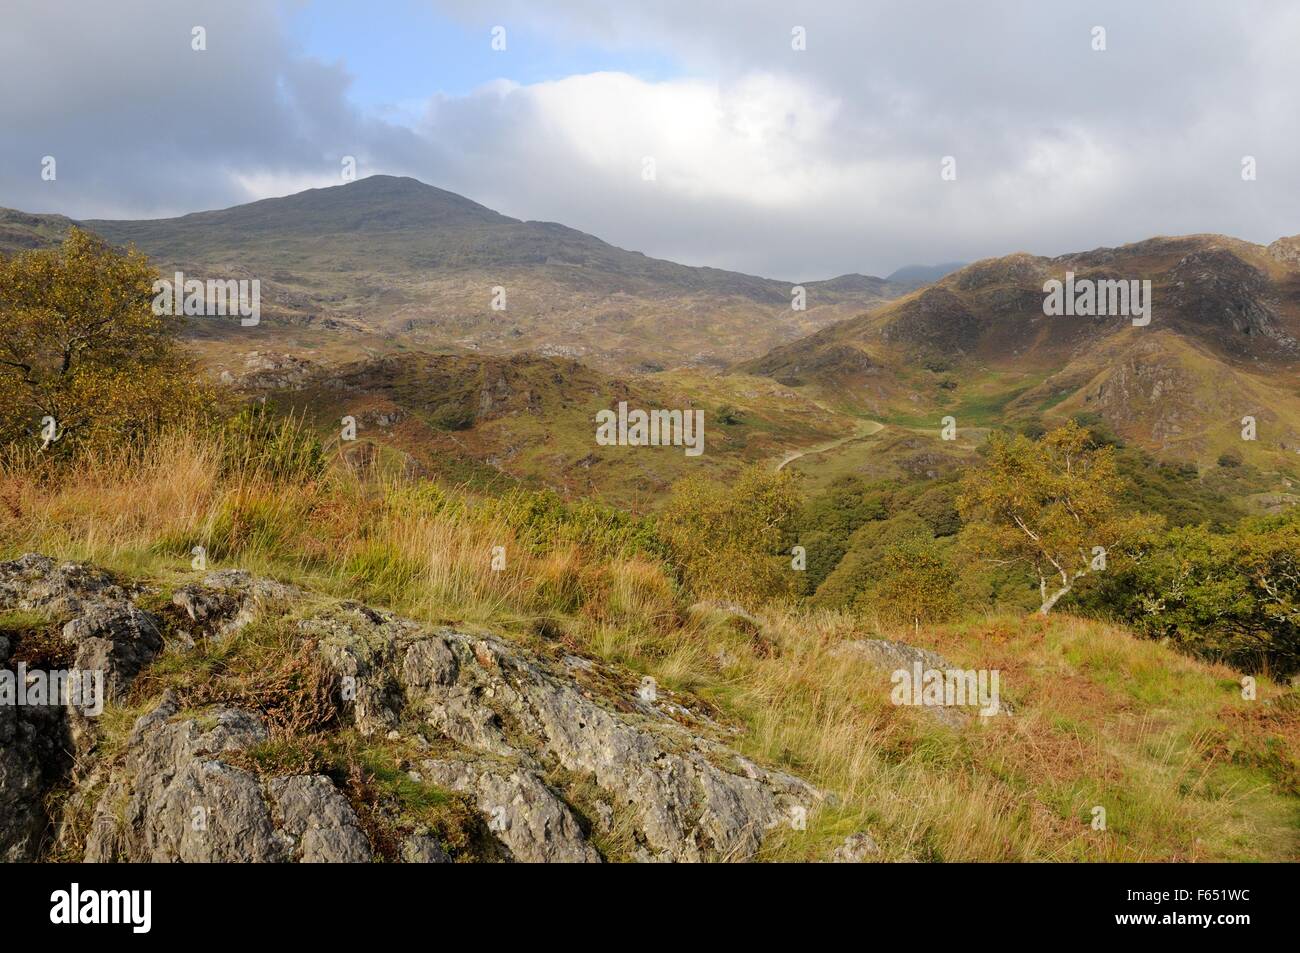 Autunno scena di dinas Emrys collina preistorica fort verso Yr Aran Beddgelert Snowdonia National Park Galles Cymru REGNO UNITO GB Foto Stock